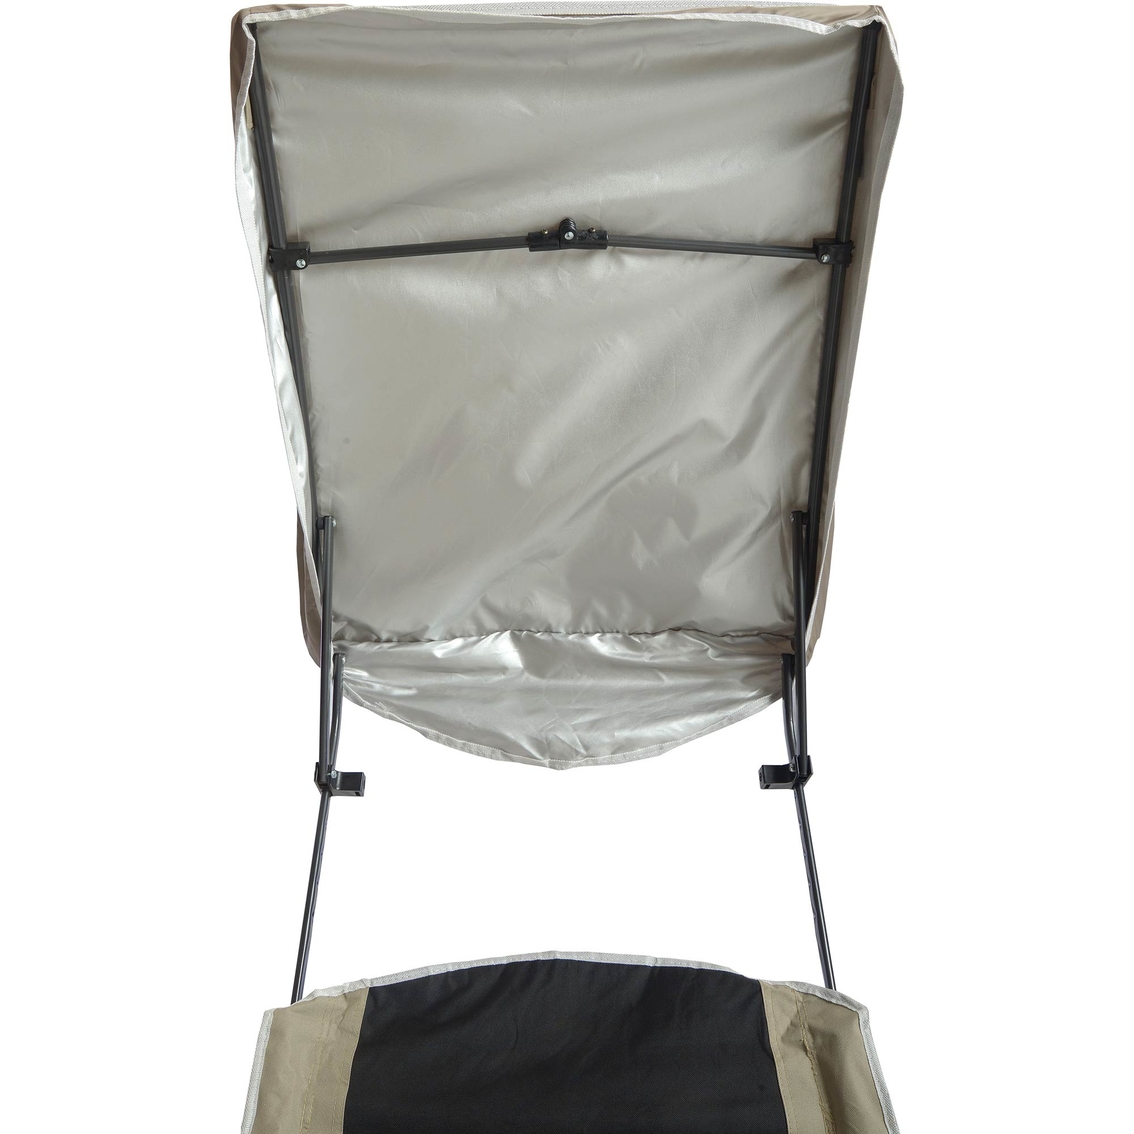 Pro Comfort High Back Shade Folding Chair - Tan/Black - Image 5 of 9